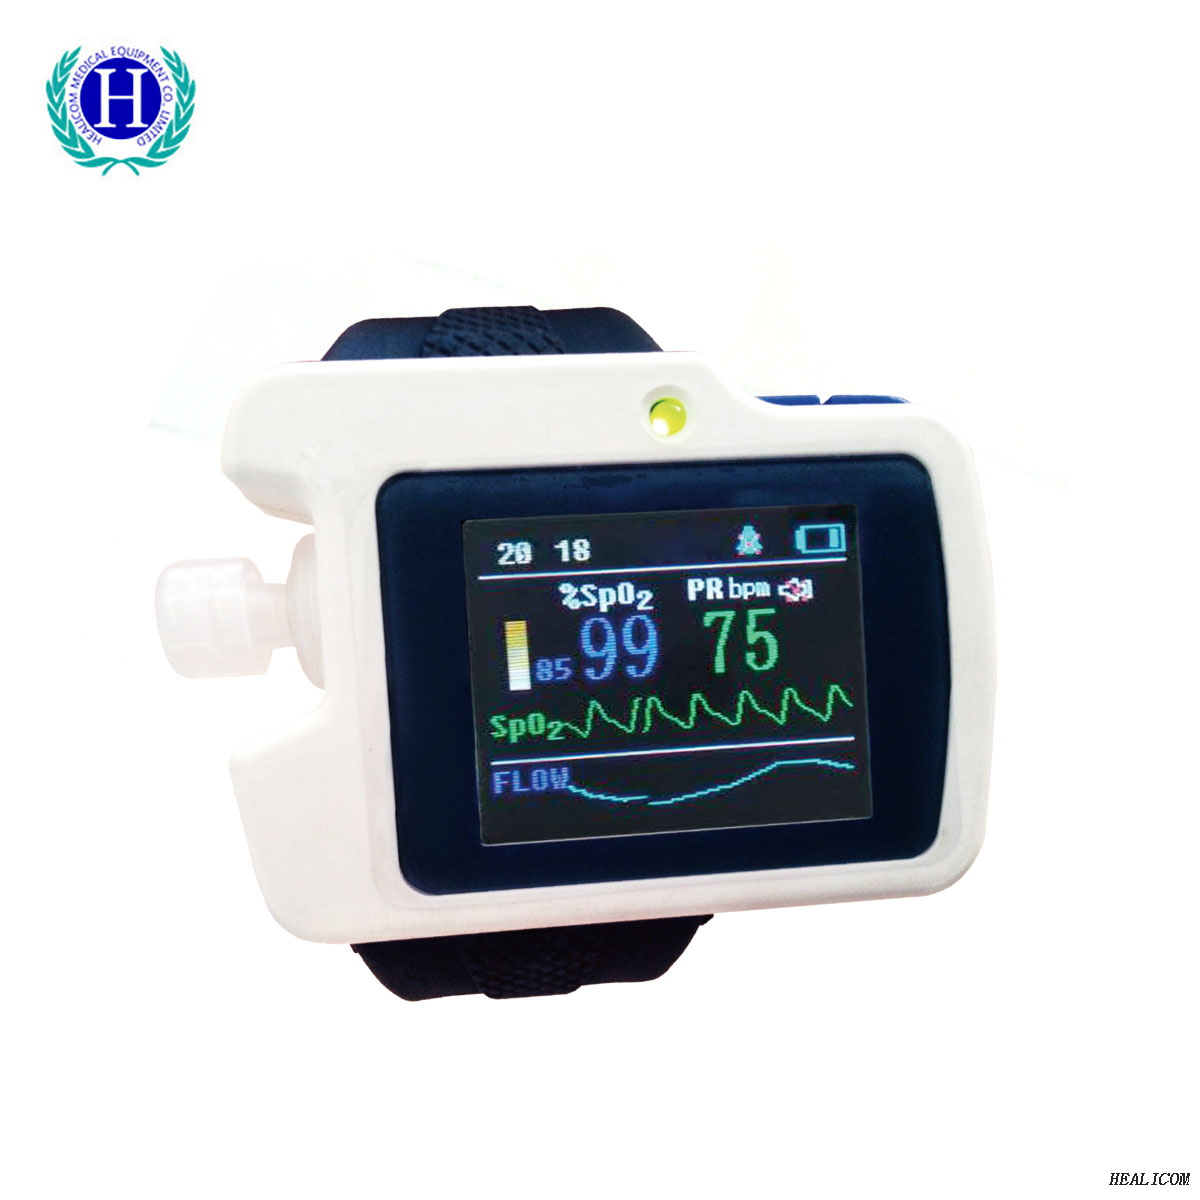 RS01 Patient Monitor COPD,Sleep Apnea Screen Meter,Respiratory Sleep Detector with PC Software 